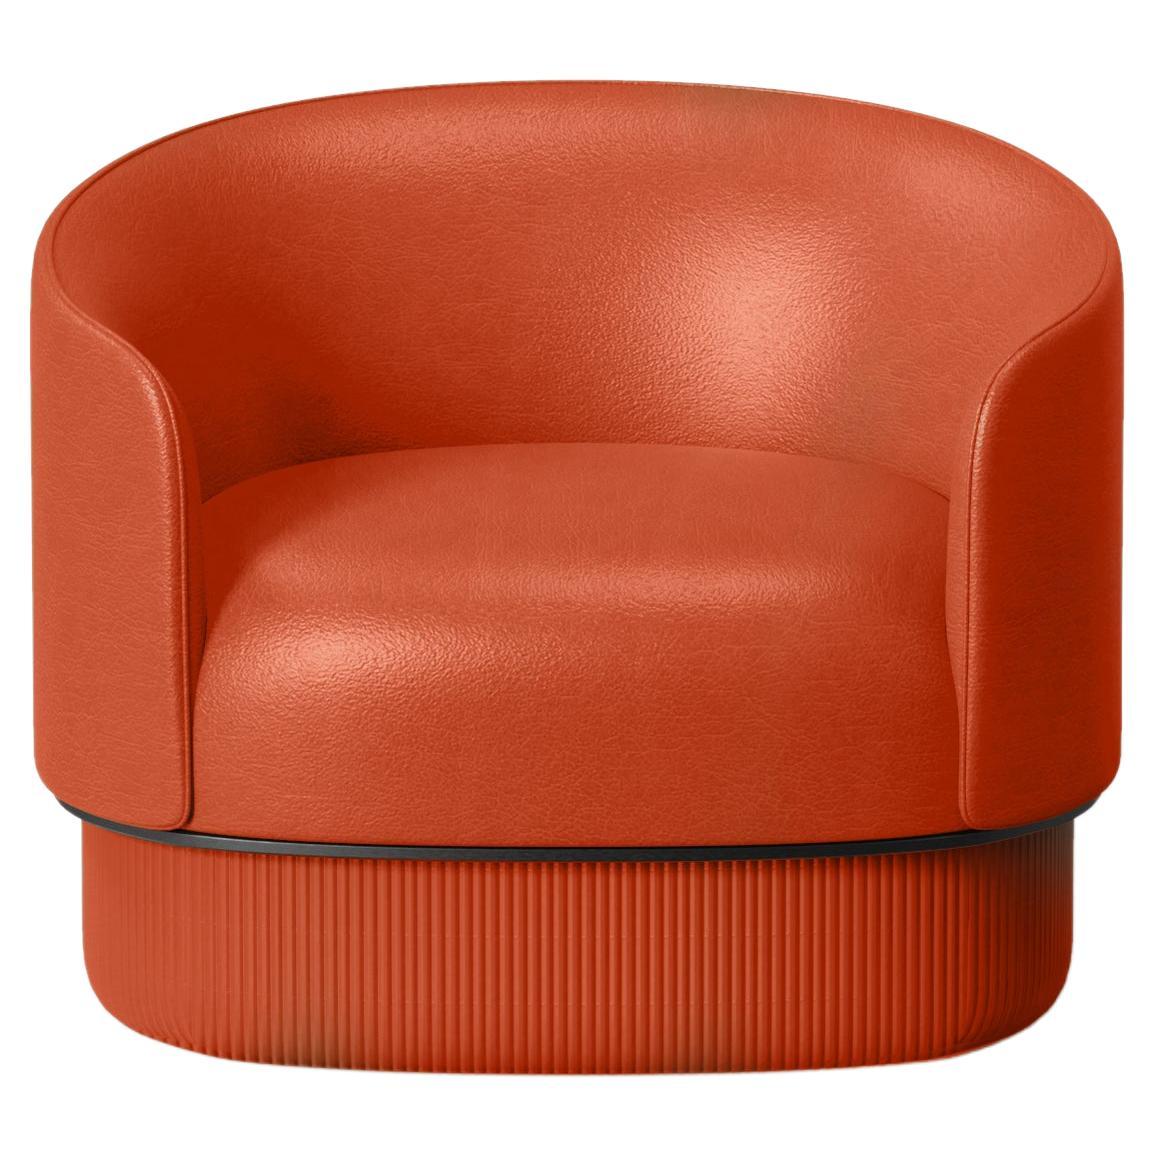 Moderner Gentle Sessel aus lachsfarbenem Leder und Metall